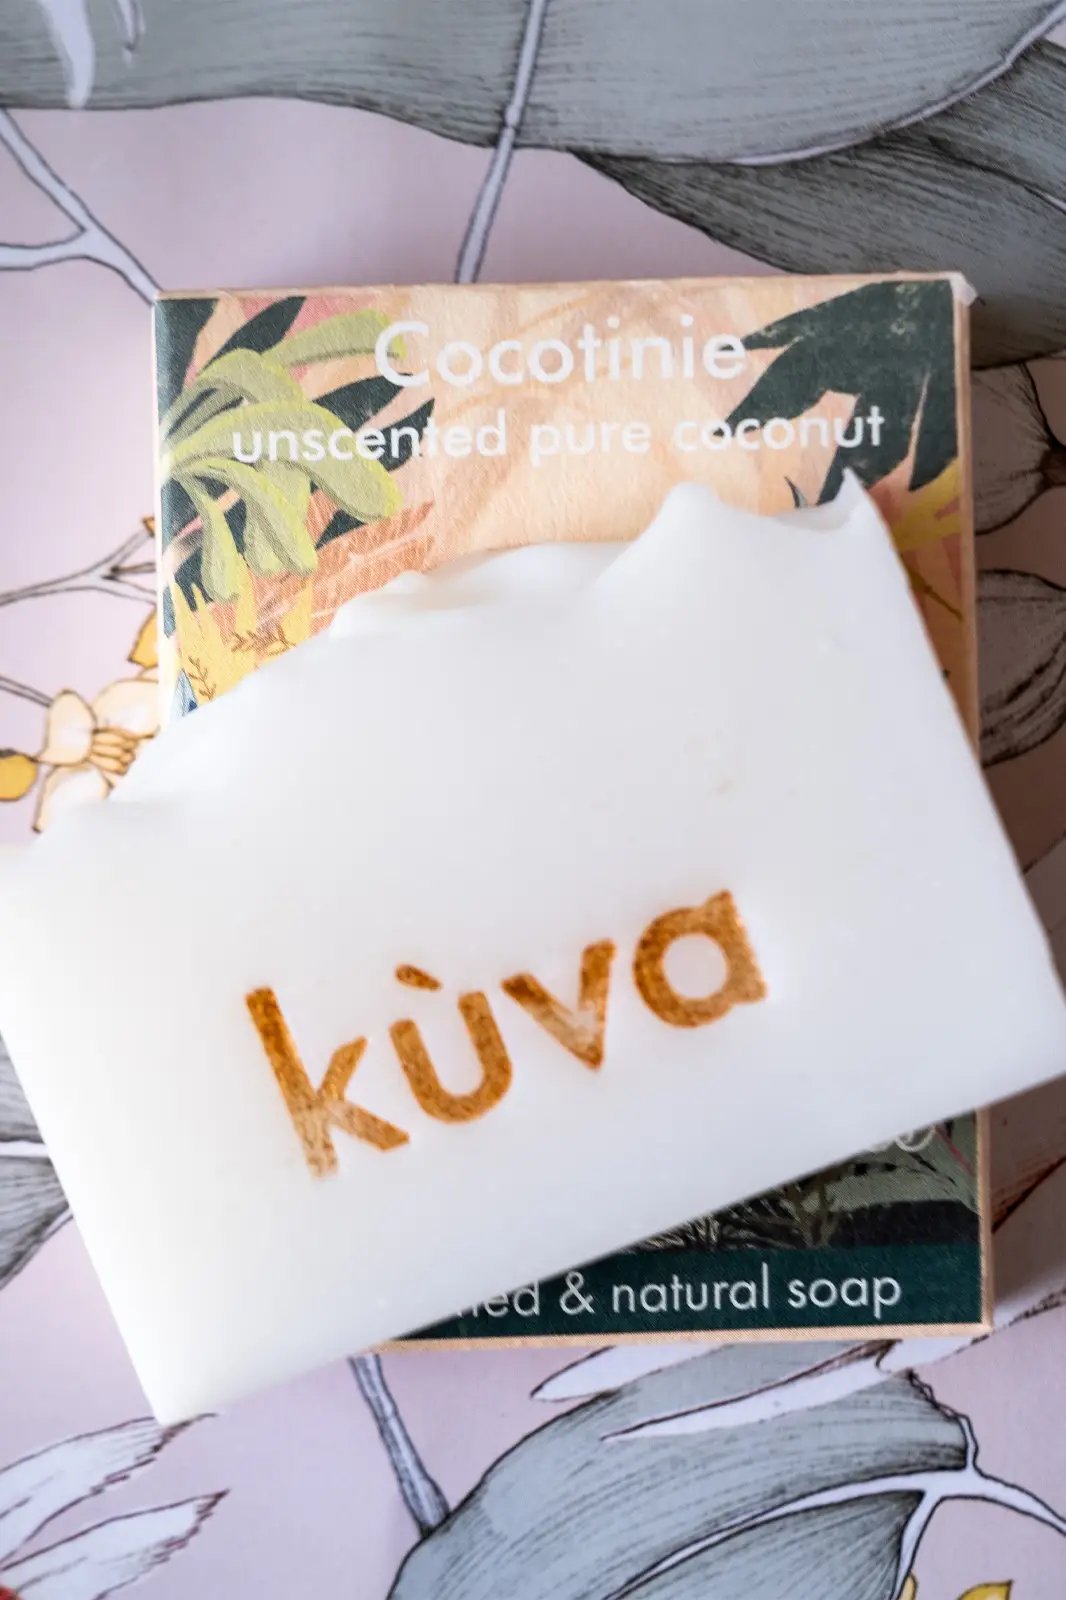 Cocotinie unscented pure coconut soap, coconut soap bar, coconut soap bar, pure coconut soap, natural soap bar, organic soap bar, Kùva Botanical